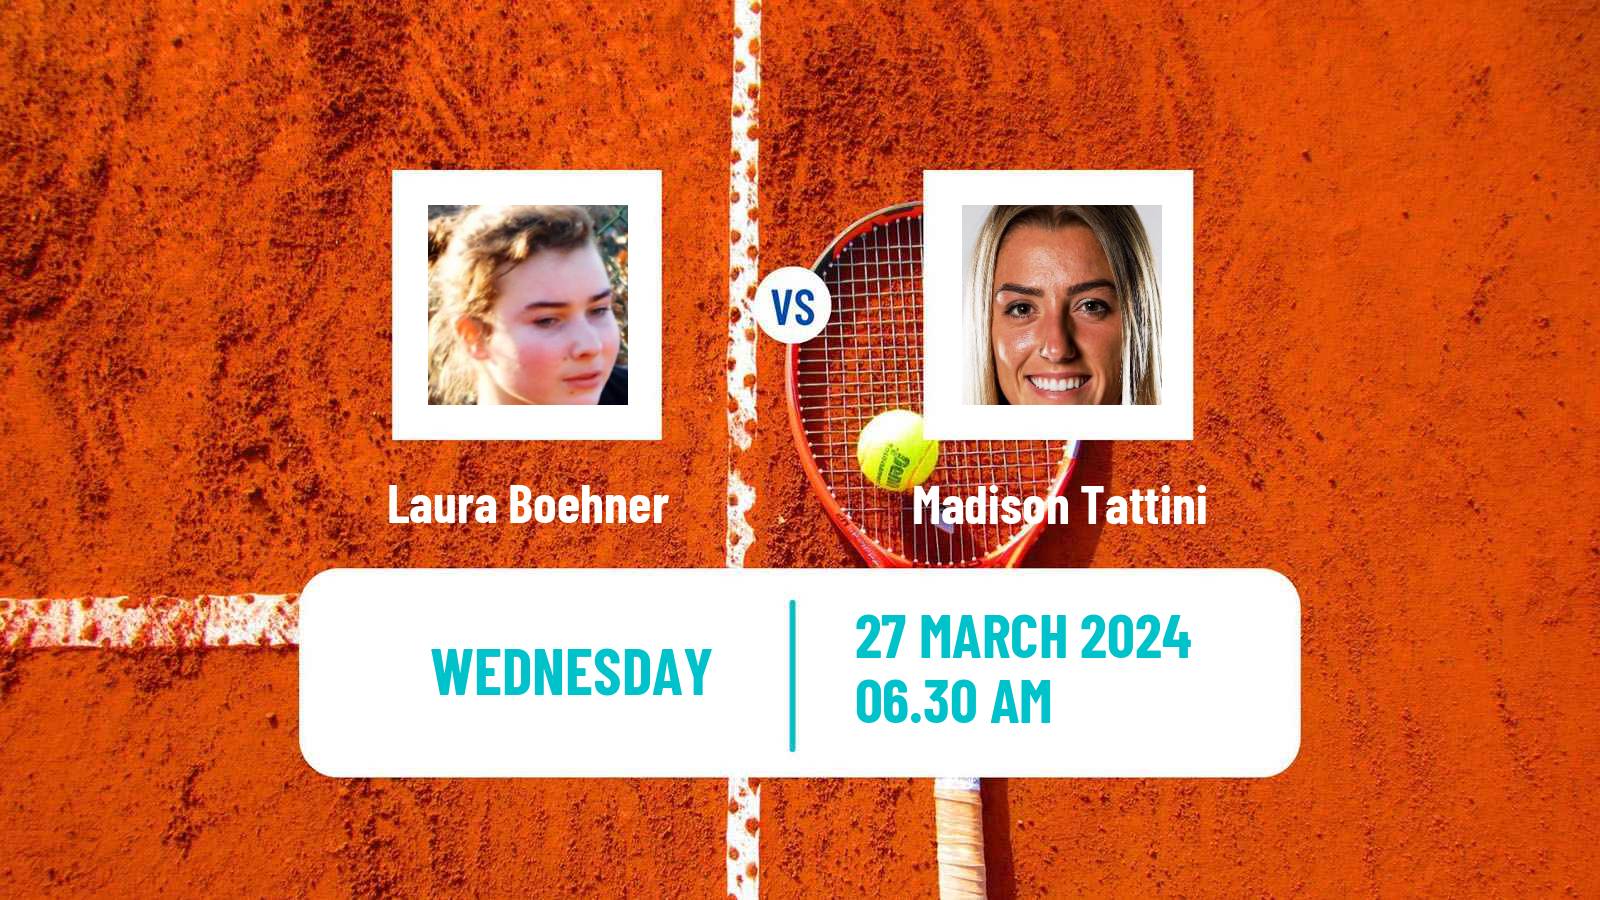 Tennis ITF W15 Antalya 7 Women Laura Boehner - Madison Tattini